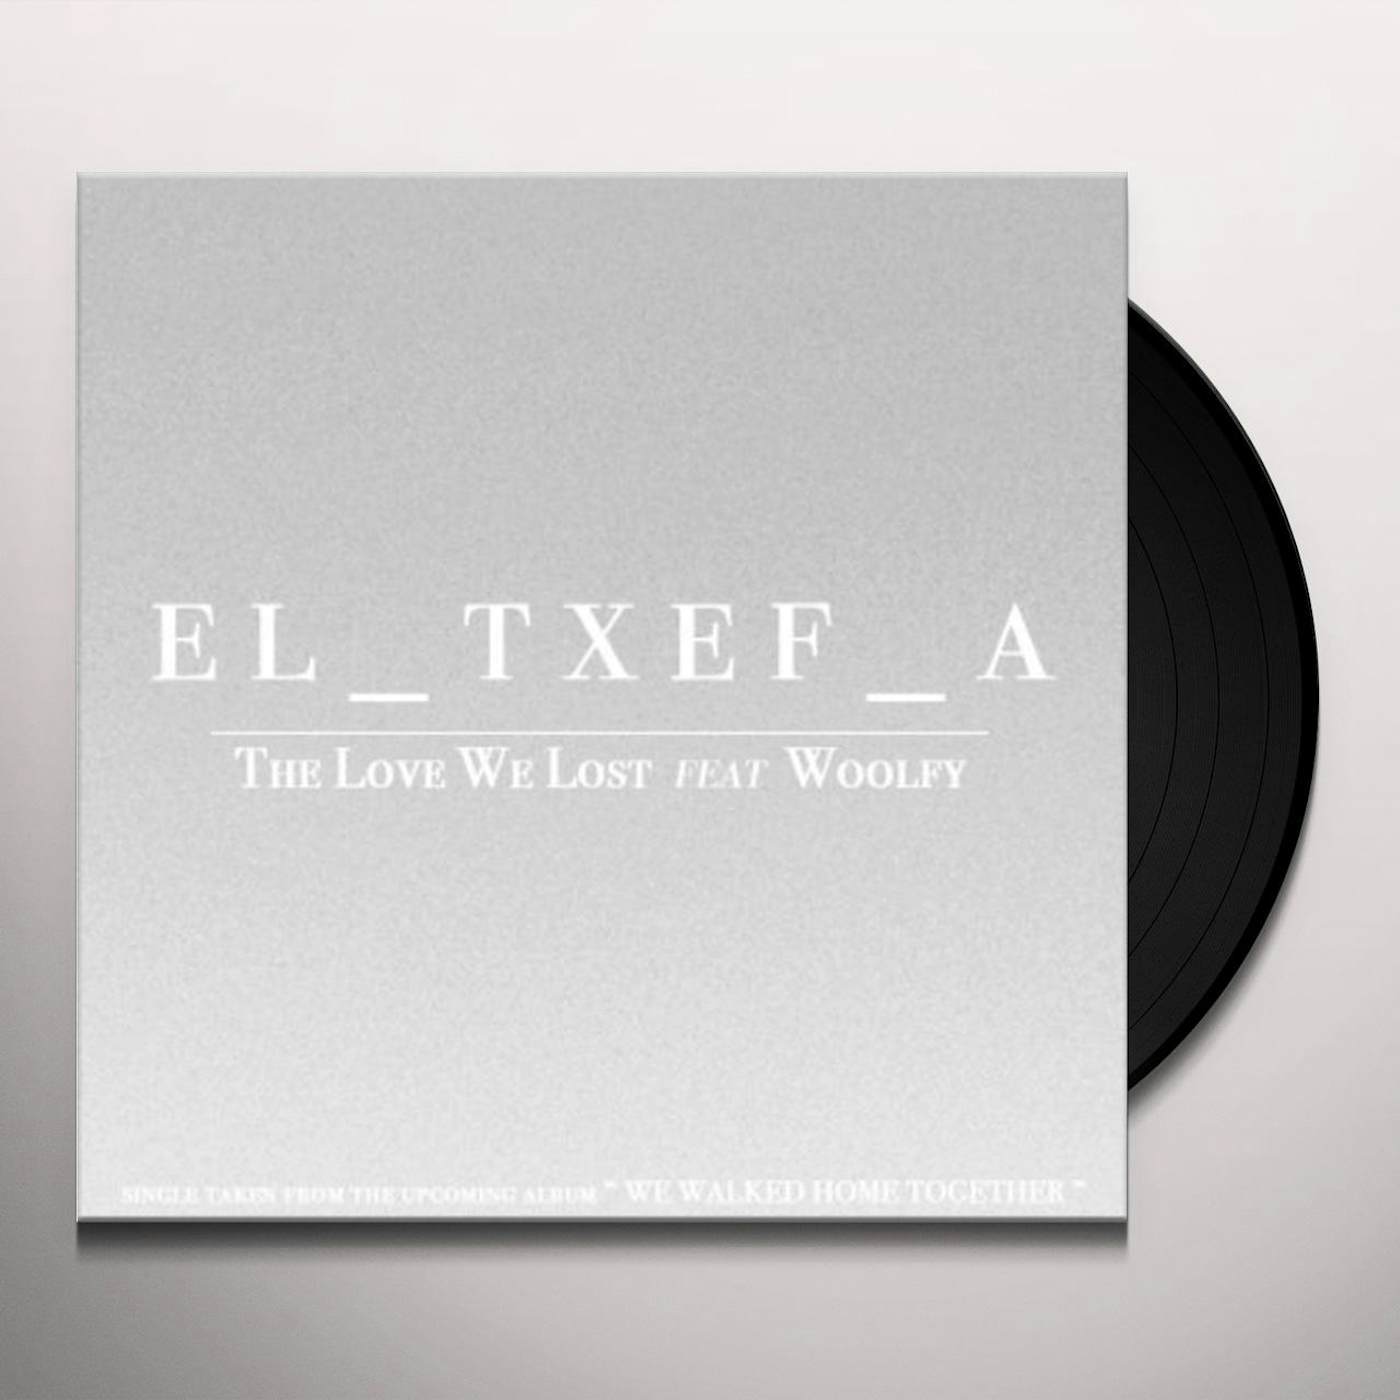 El-Txef-A LOVE WE LOST (FEAT WOOLFY) Vinyl Record